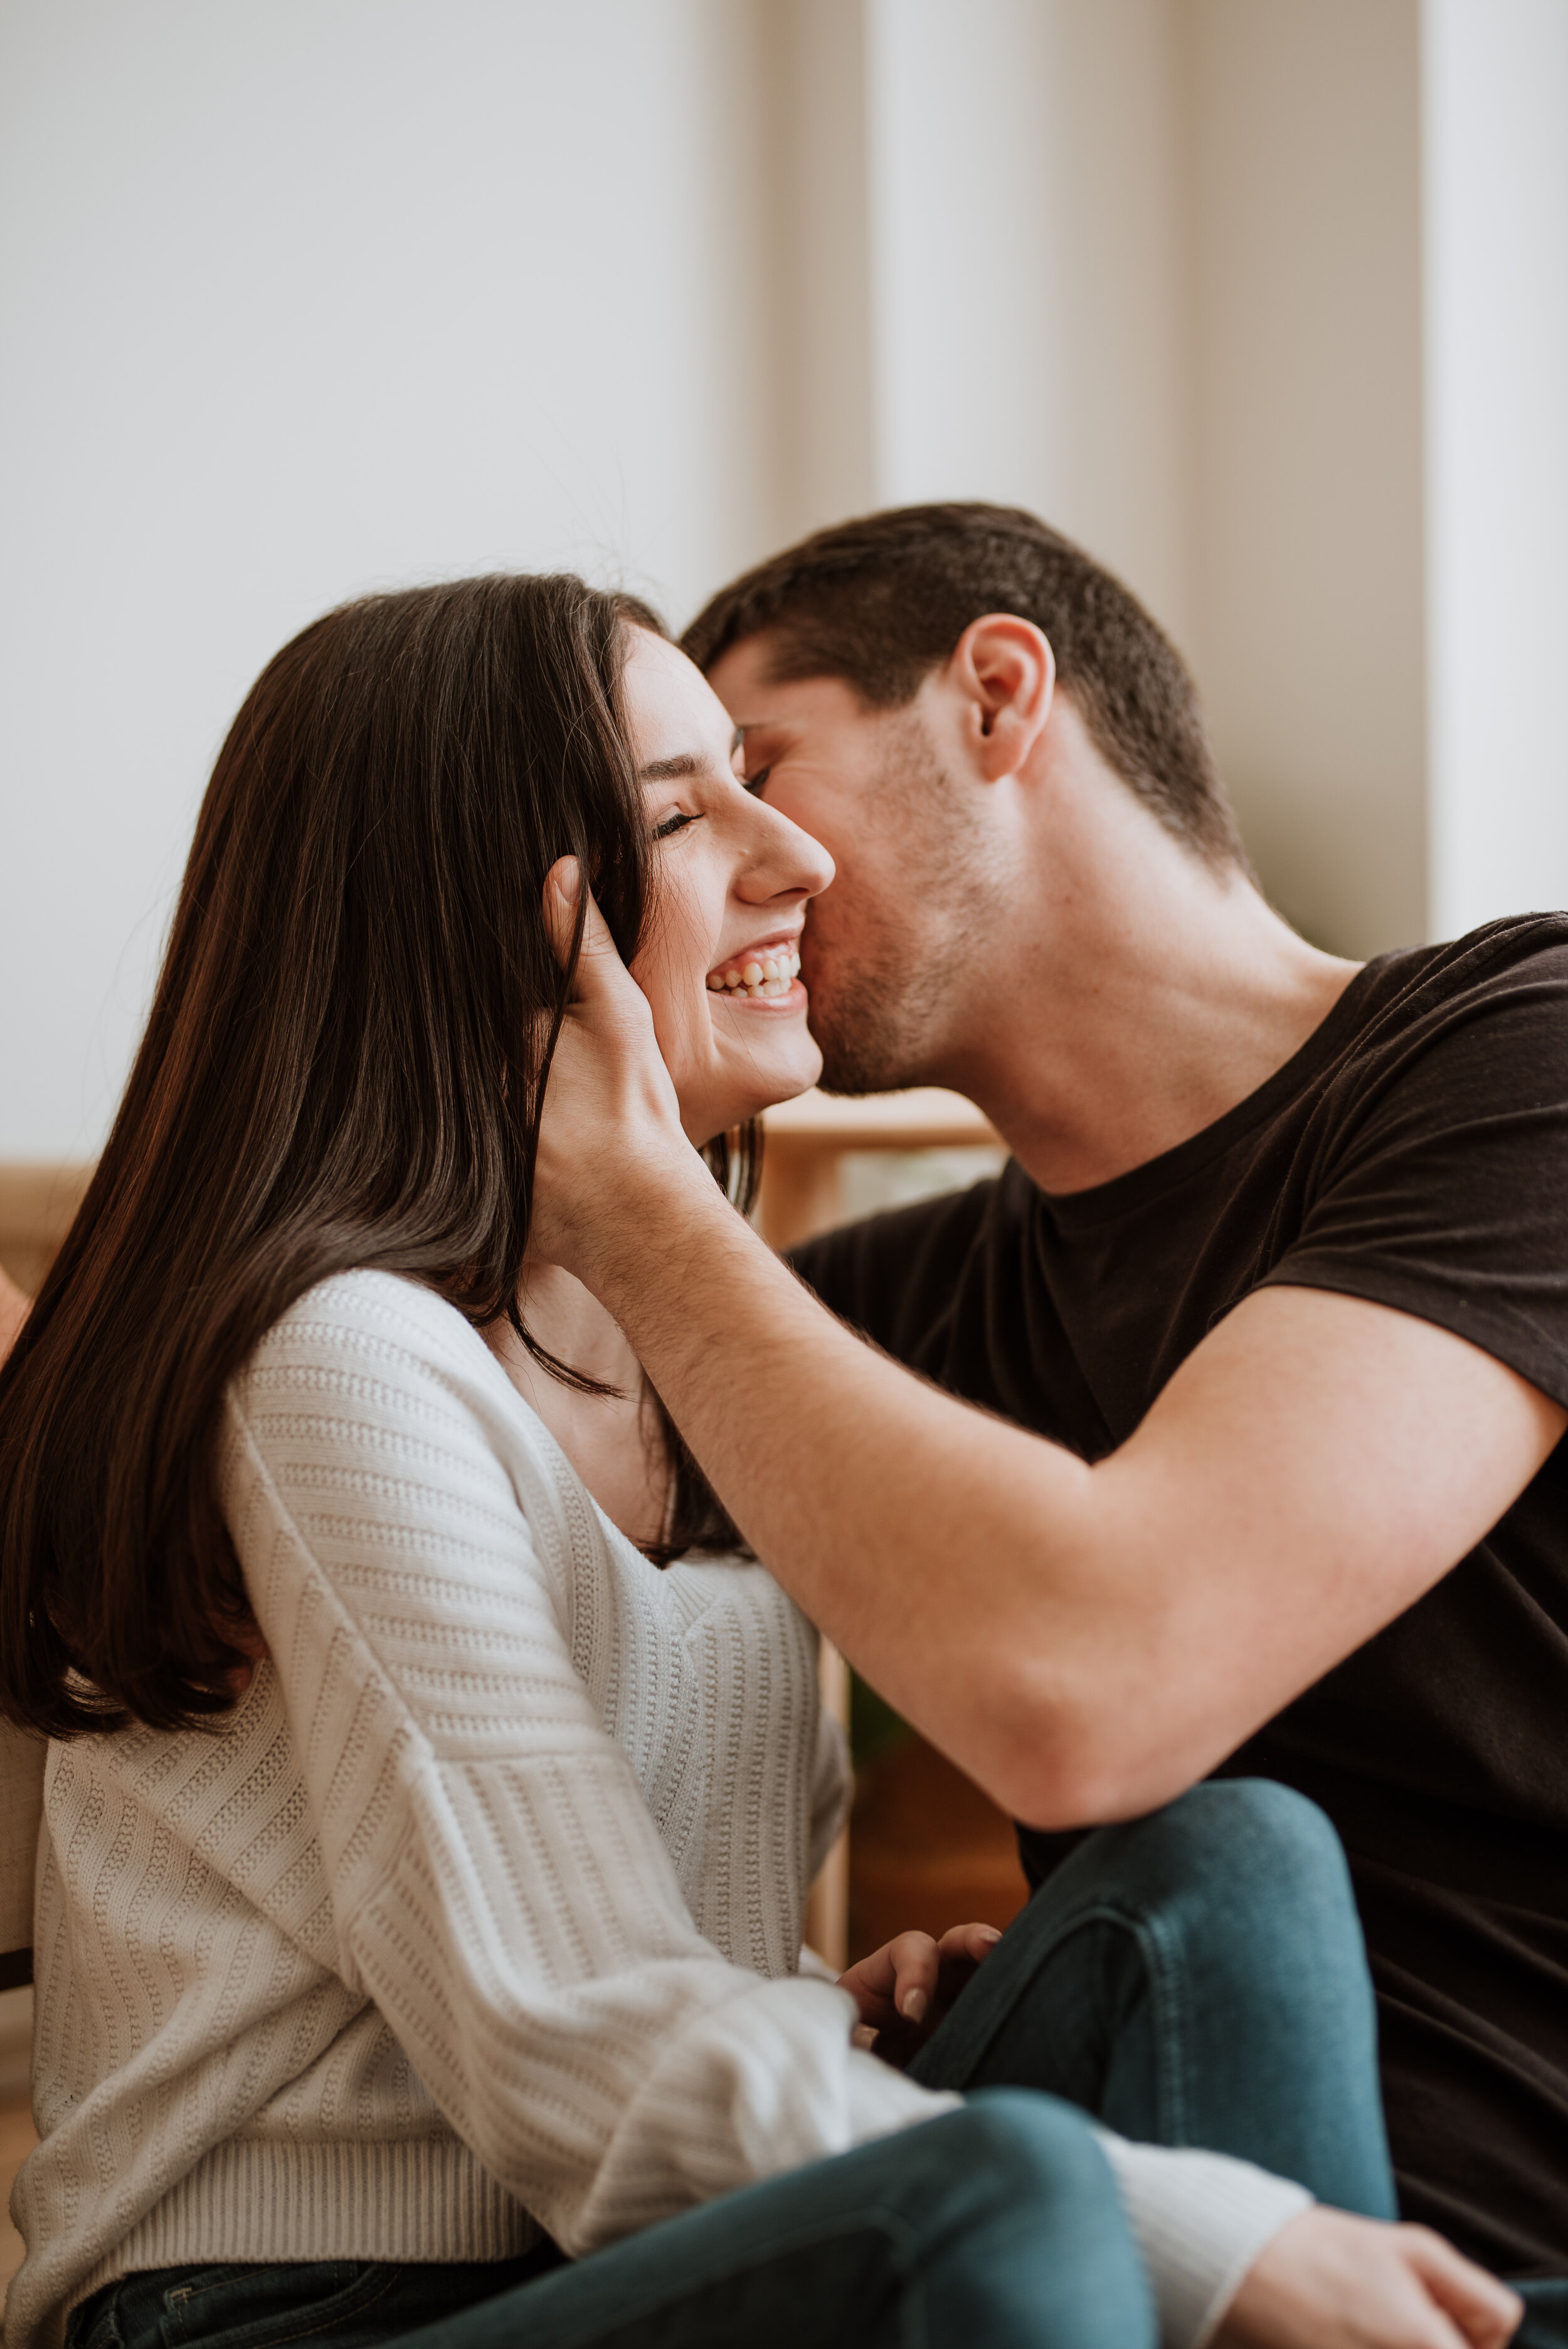 Man kissing woman's cheek while she laughs.